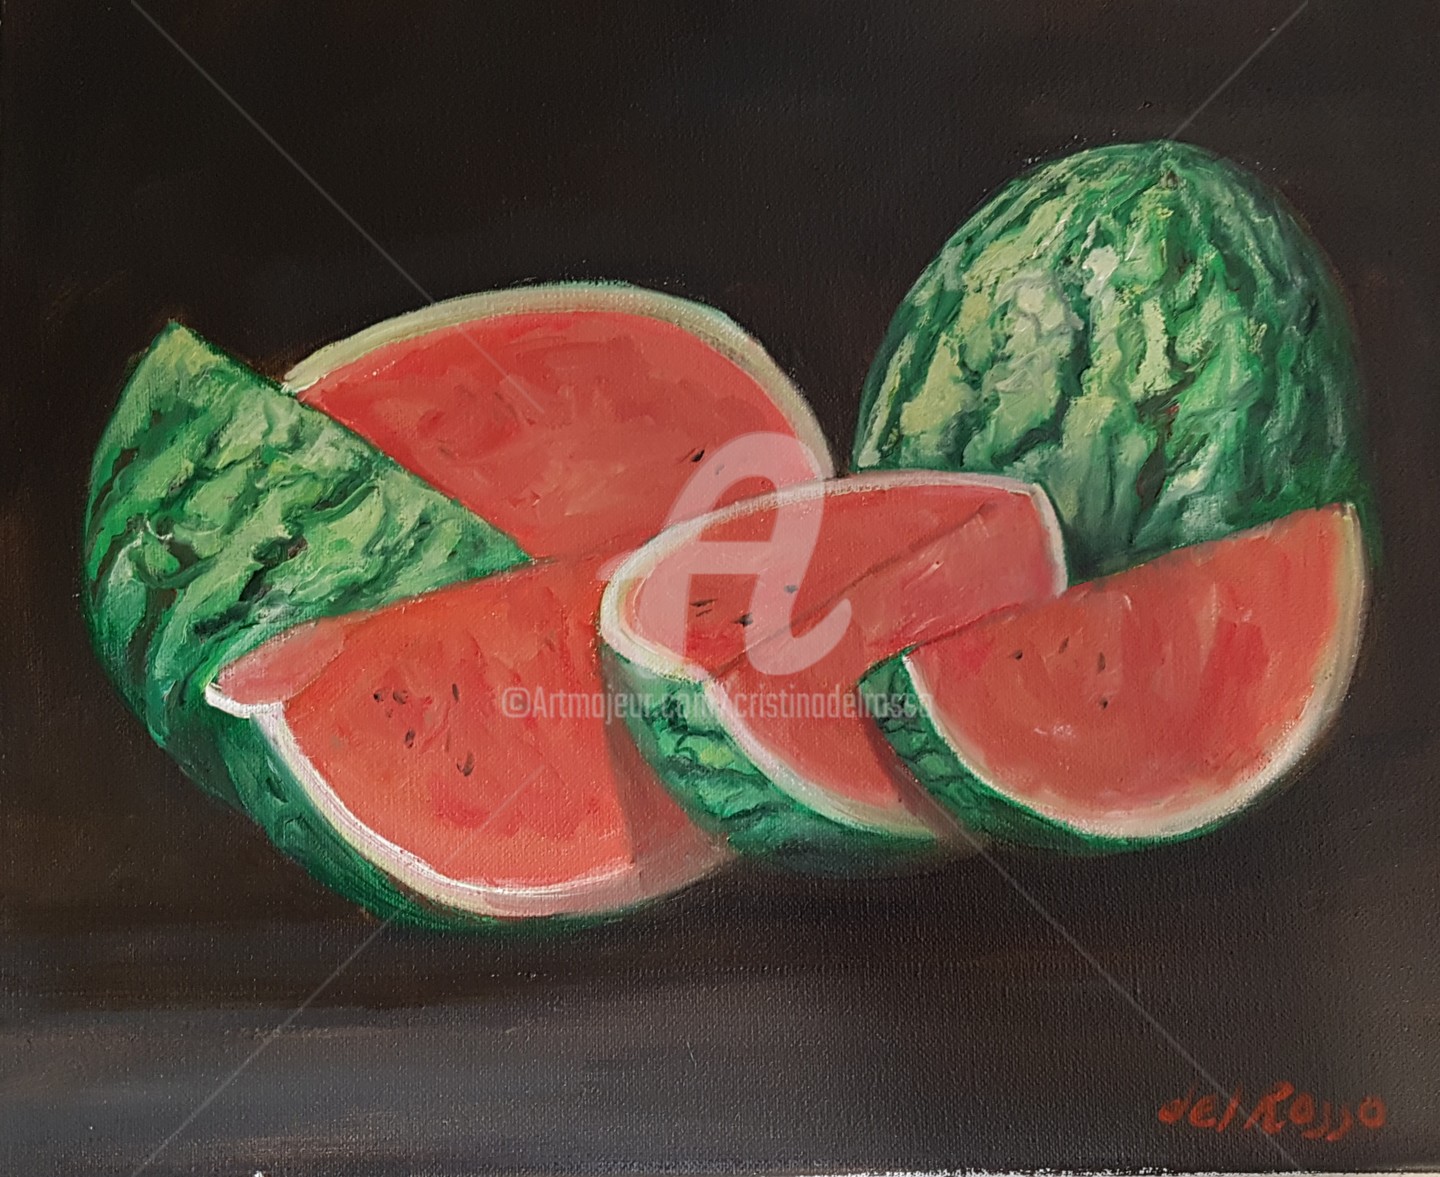 Cristina Del Rosso - Sandías fresquitas (Fresh watermelons)